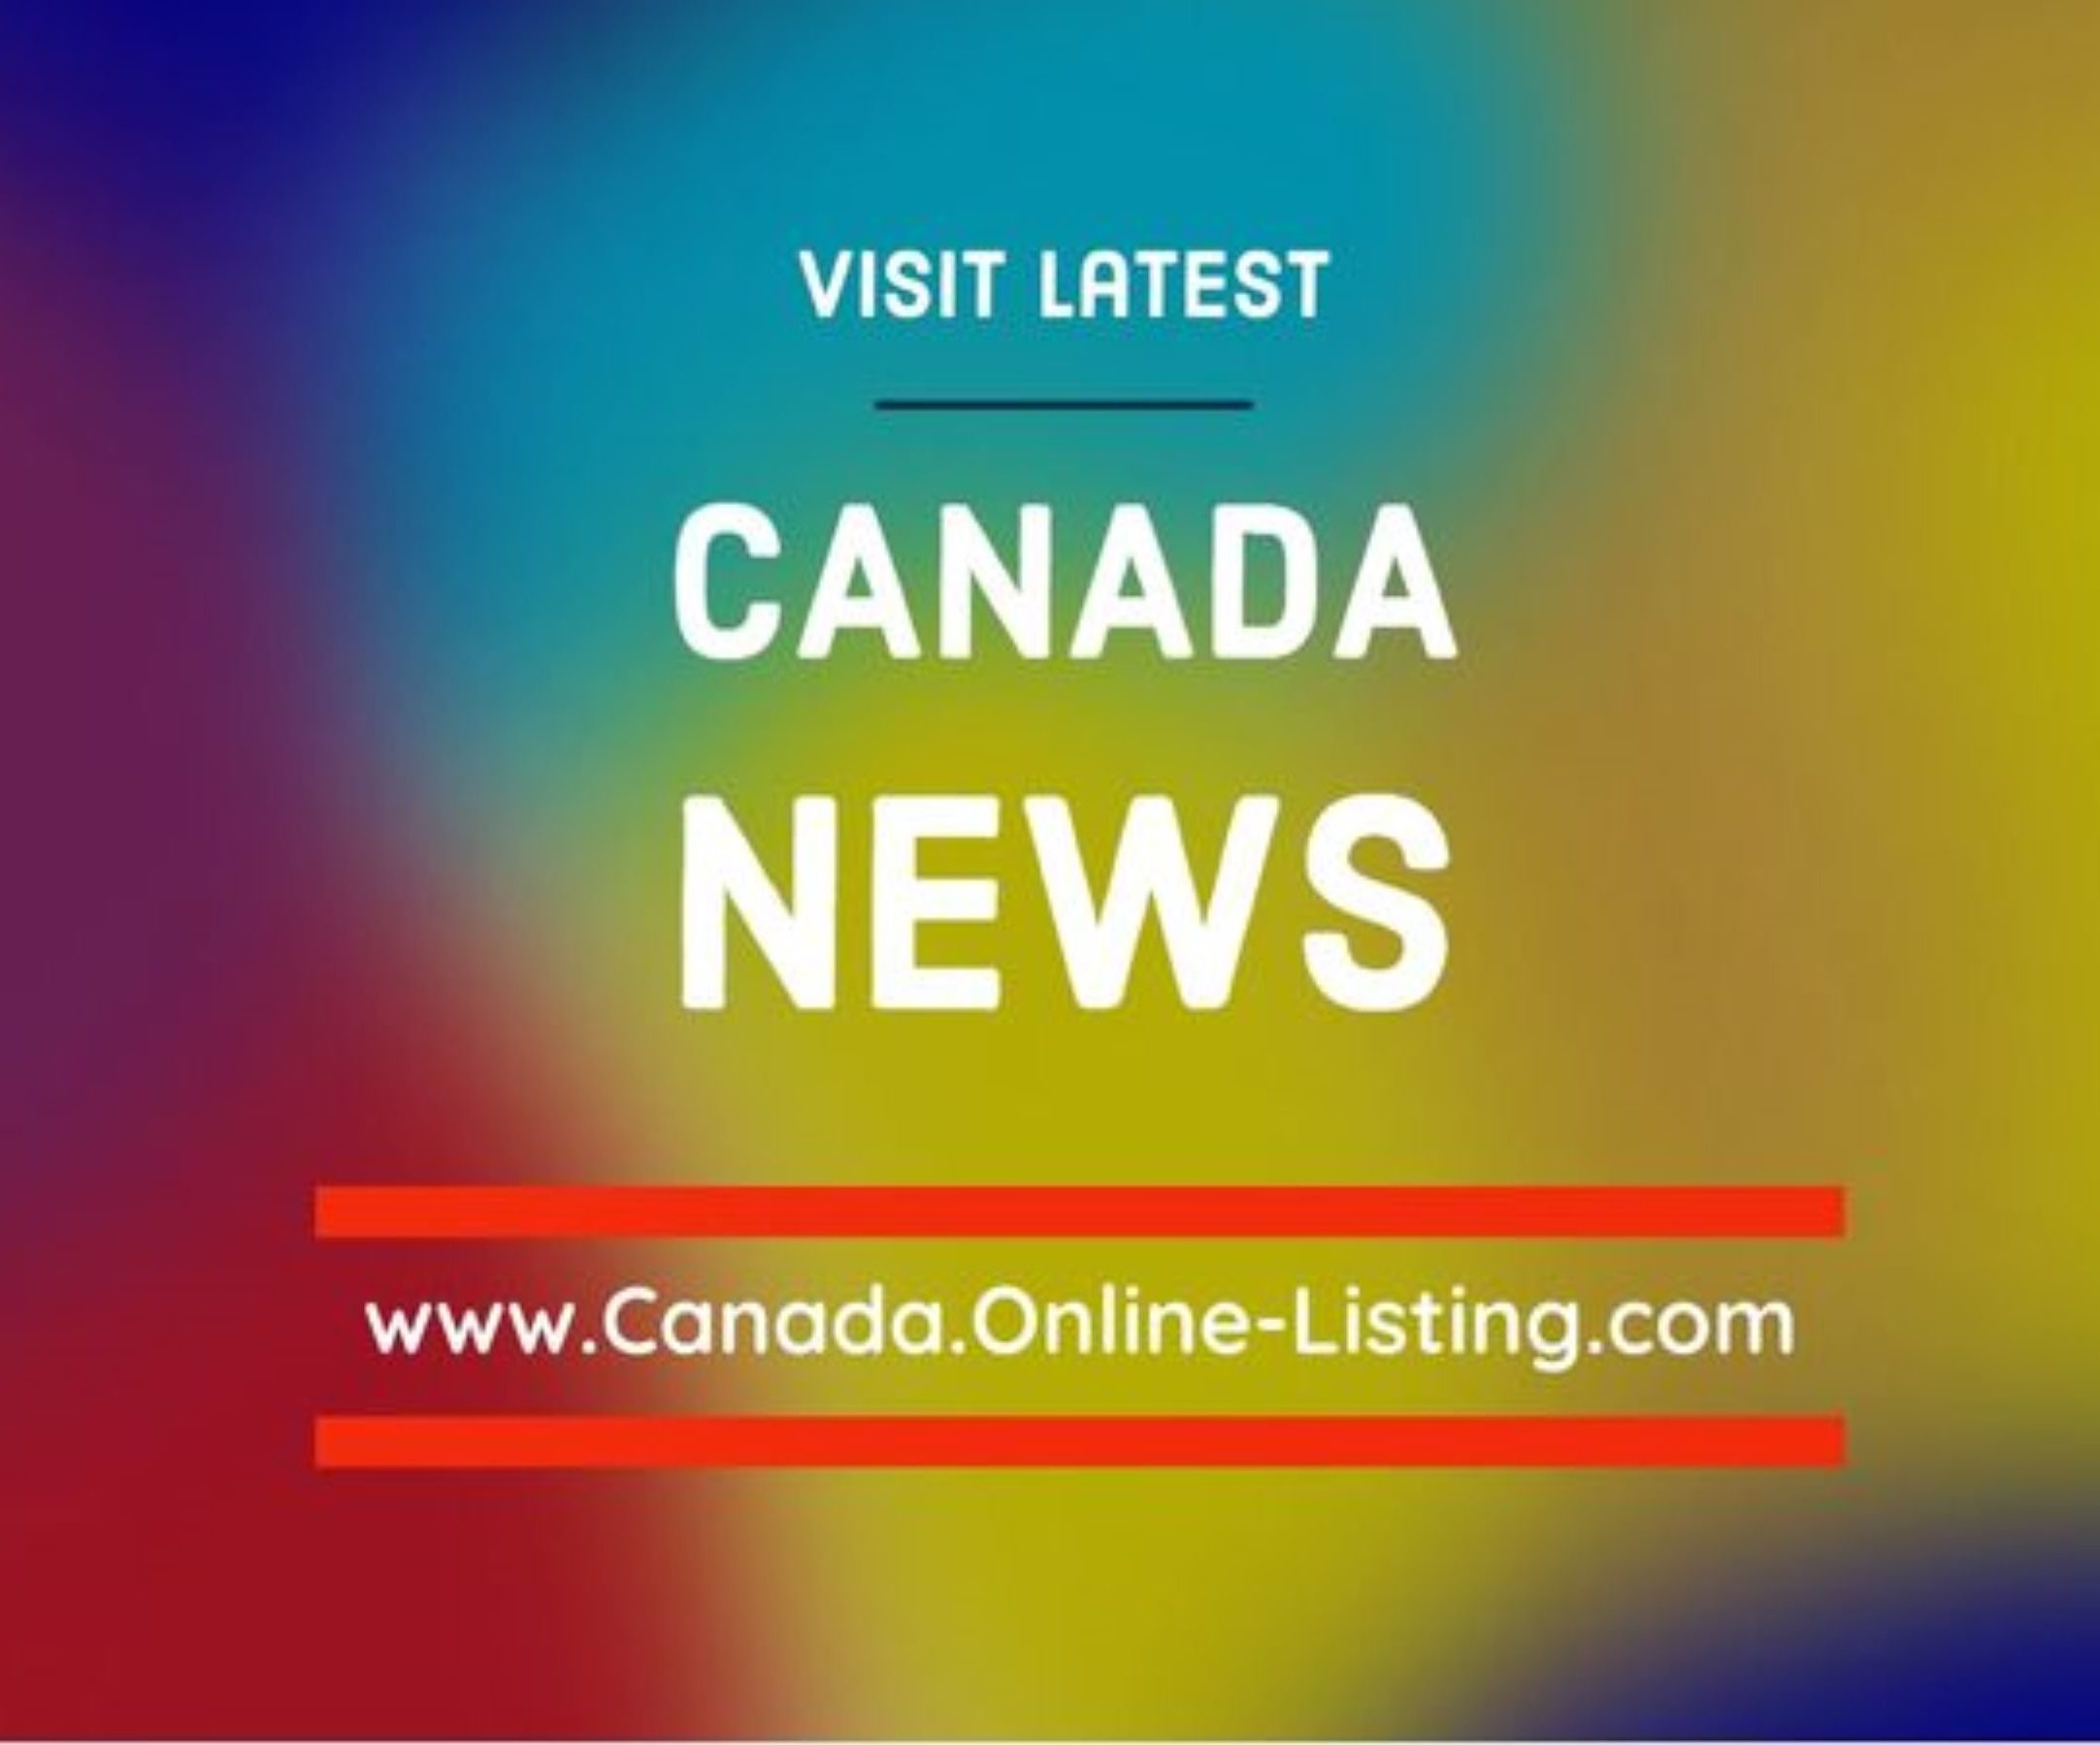 Canada Online Listing Blog News Service Rumors